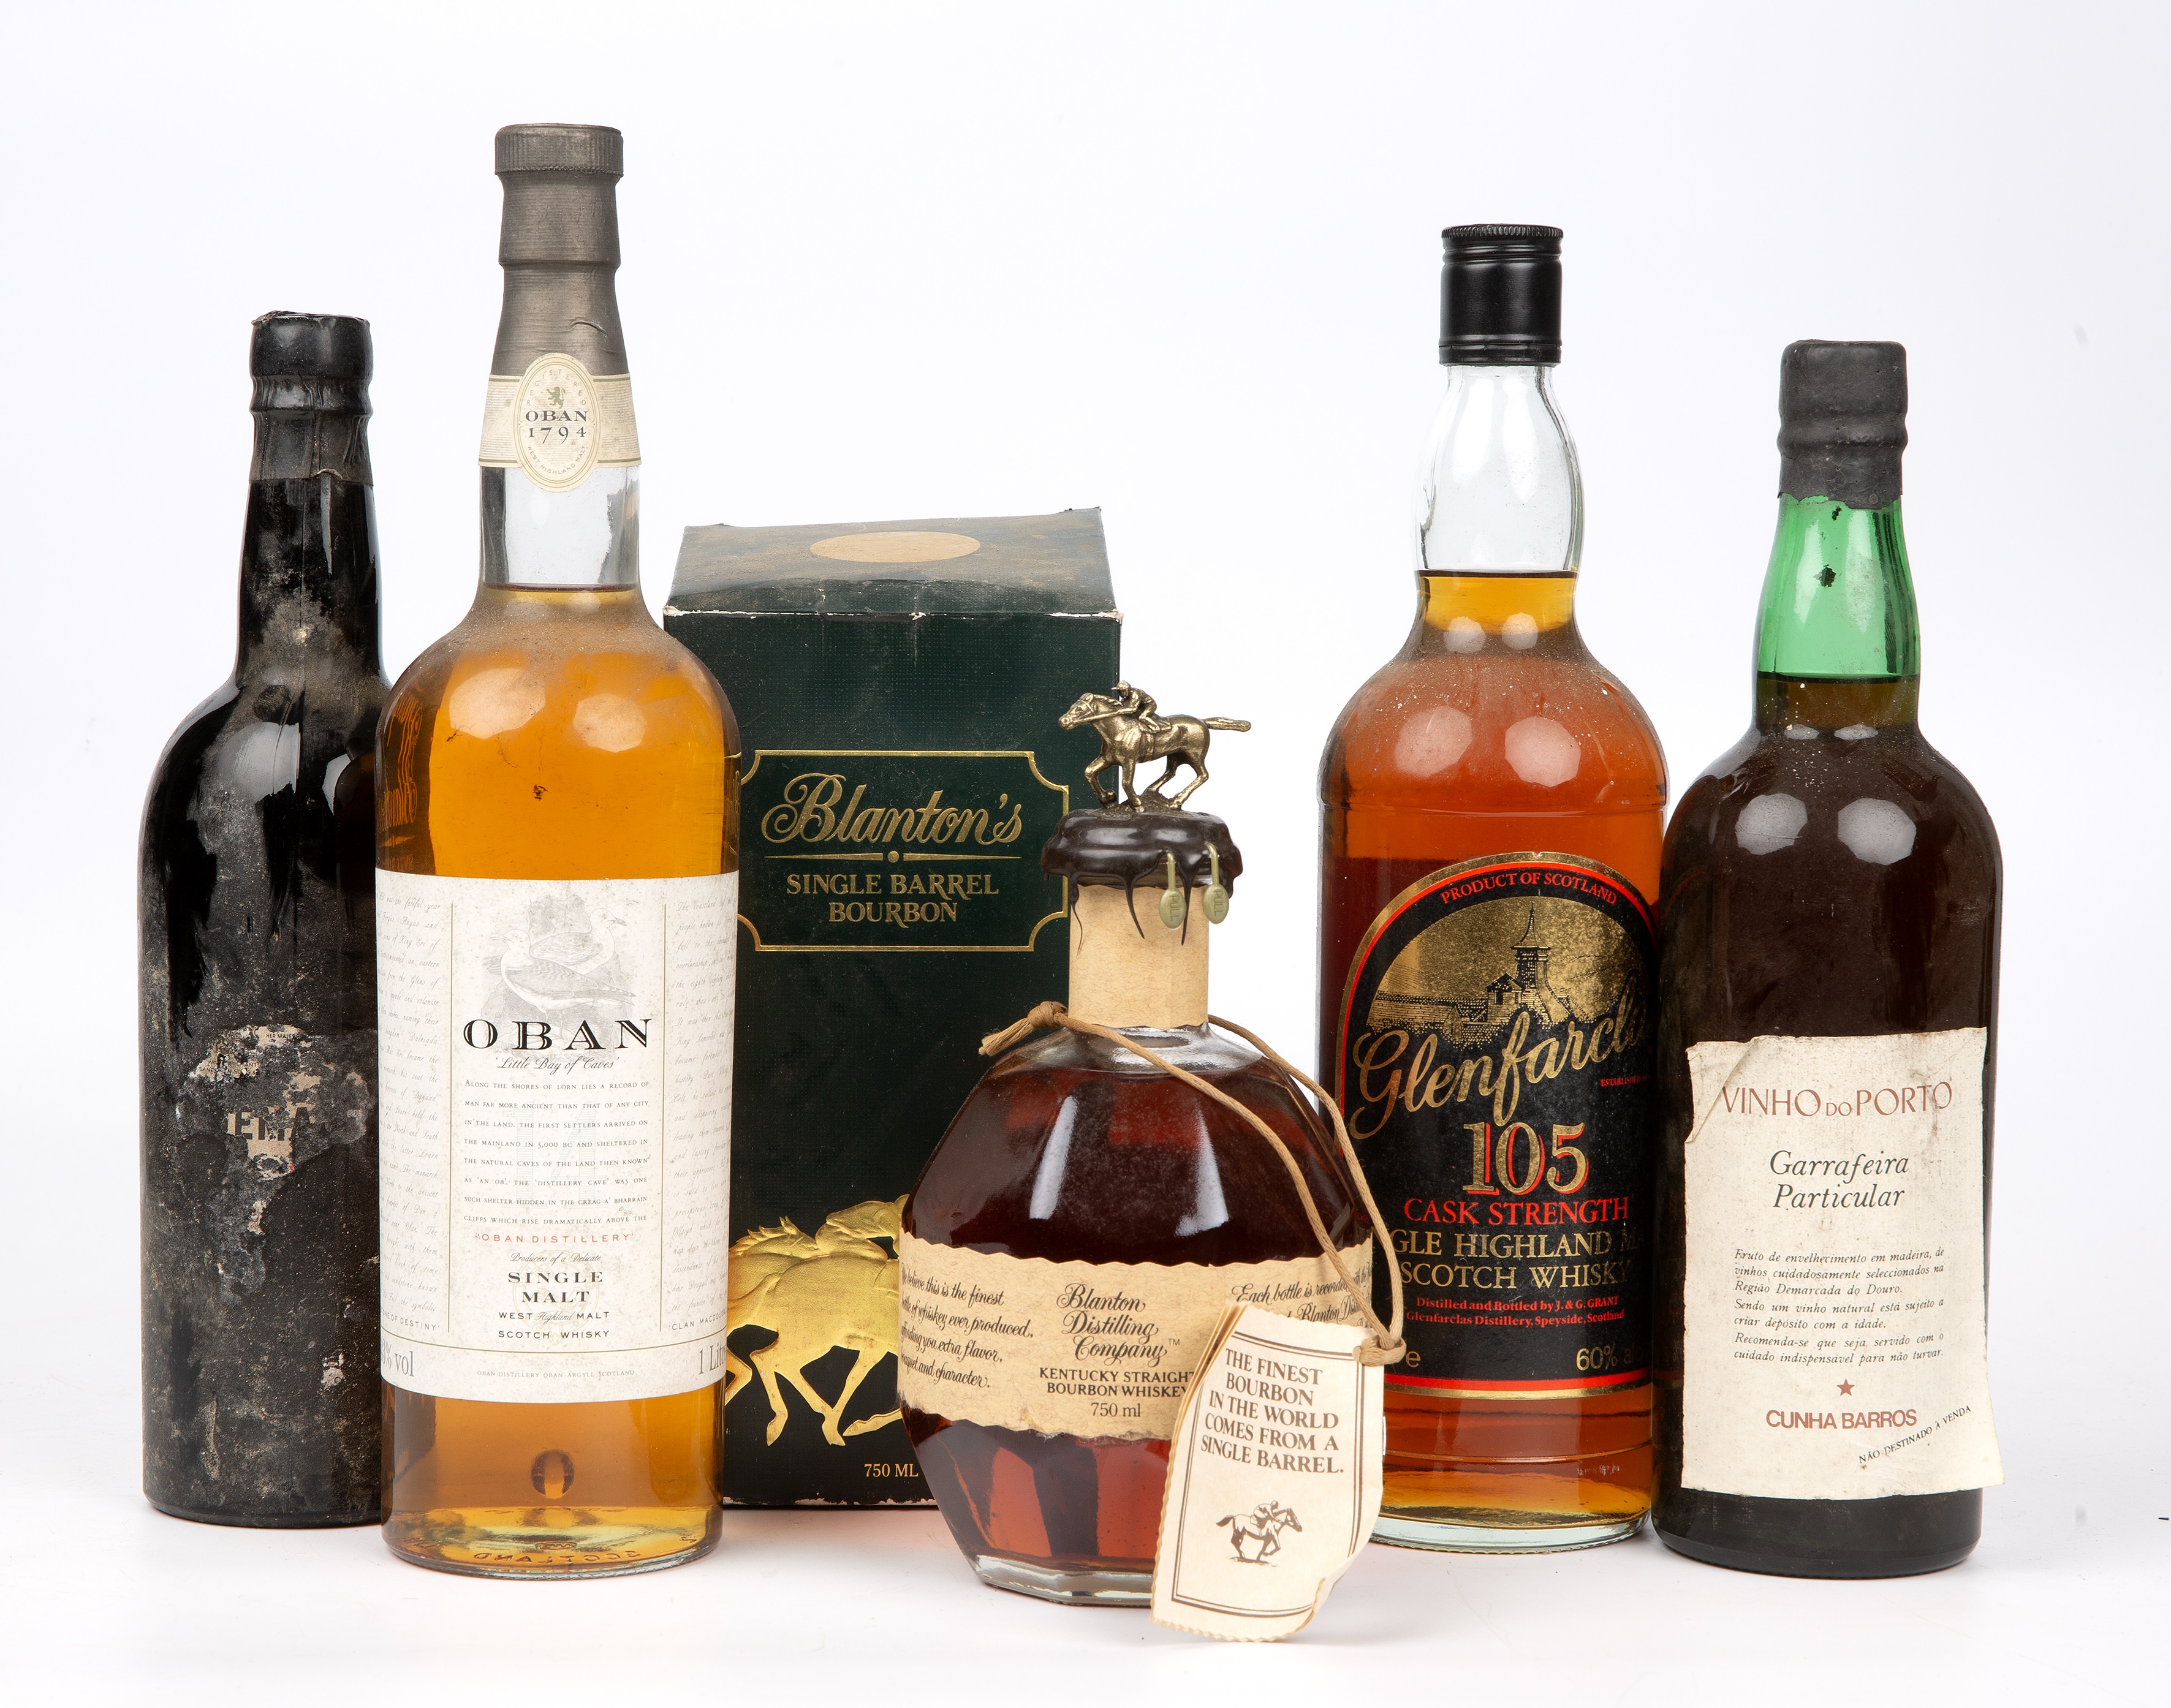 A litre bottle of Oban single malt Whisky, Blanton's single barrel bourbon, a litre bottle of